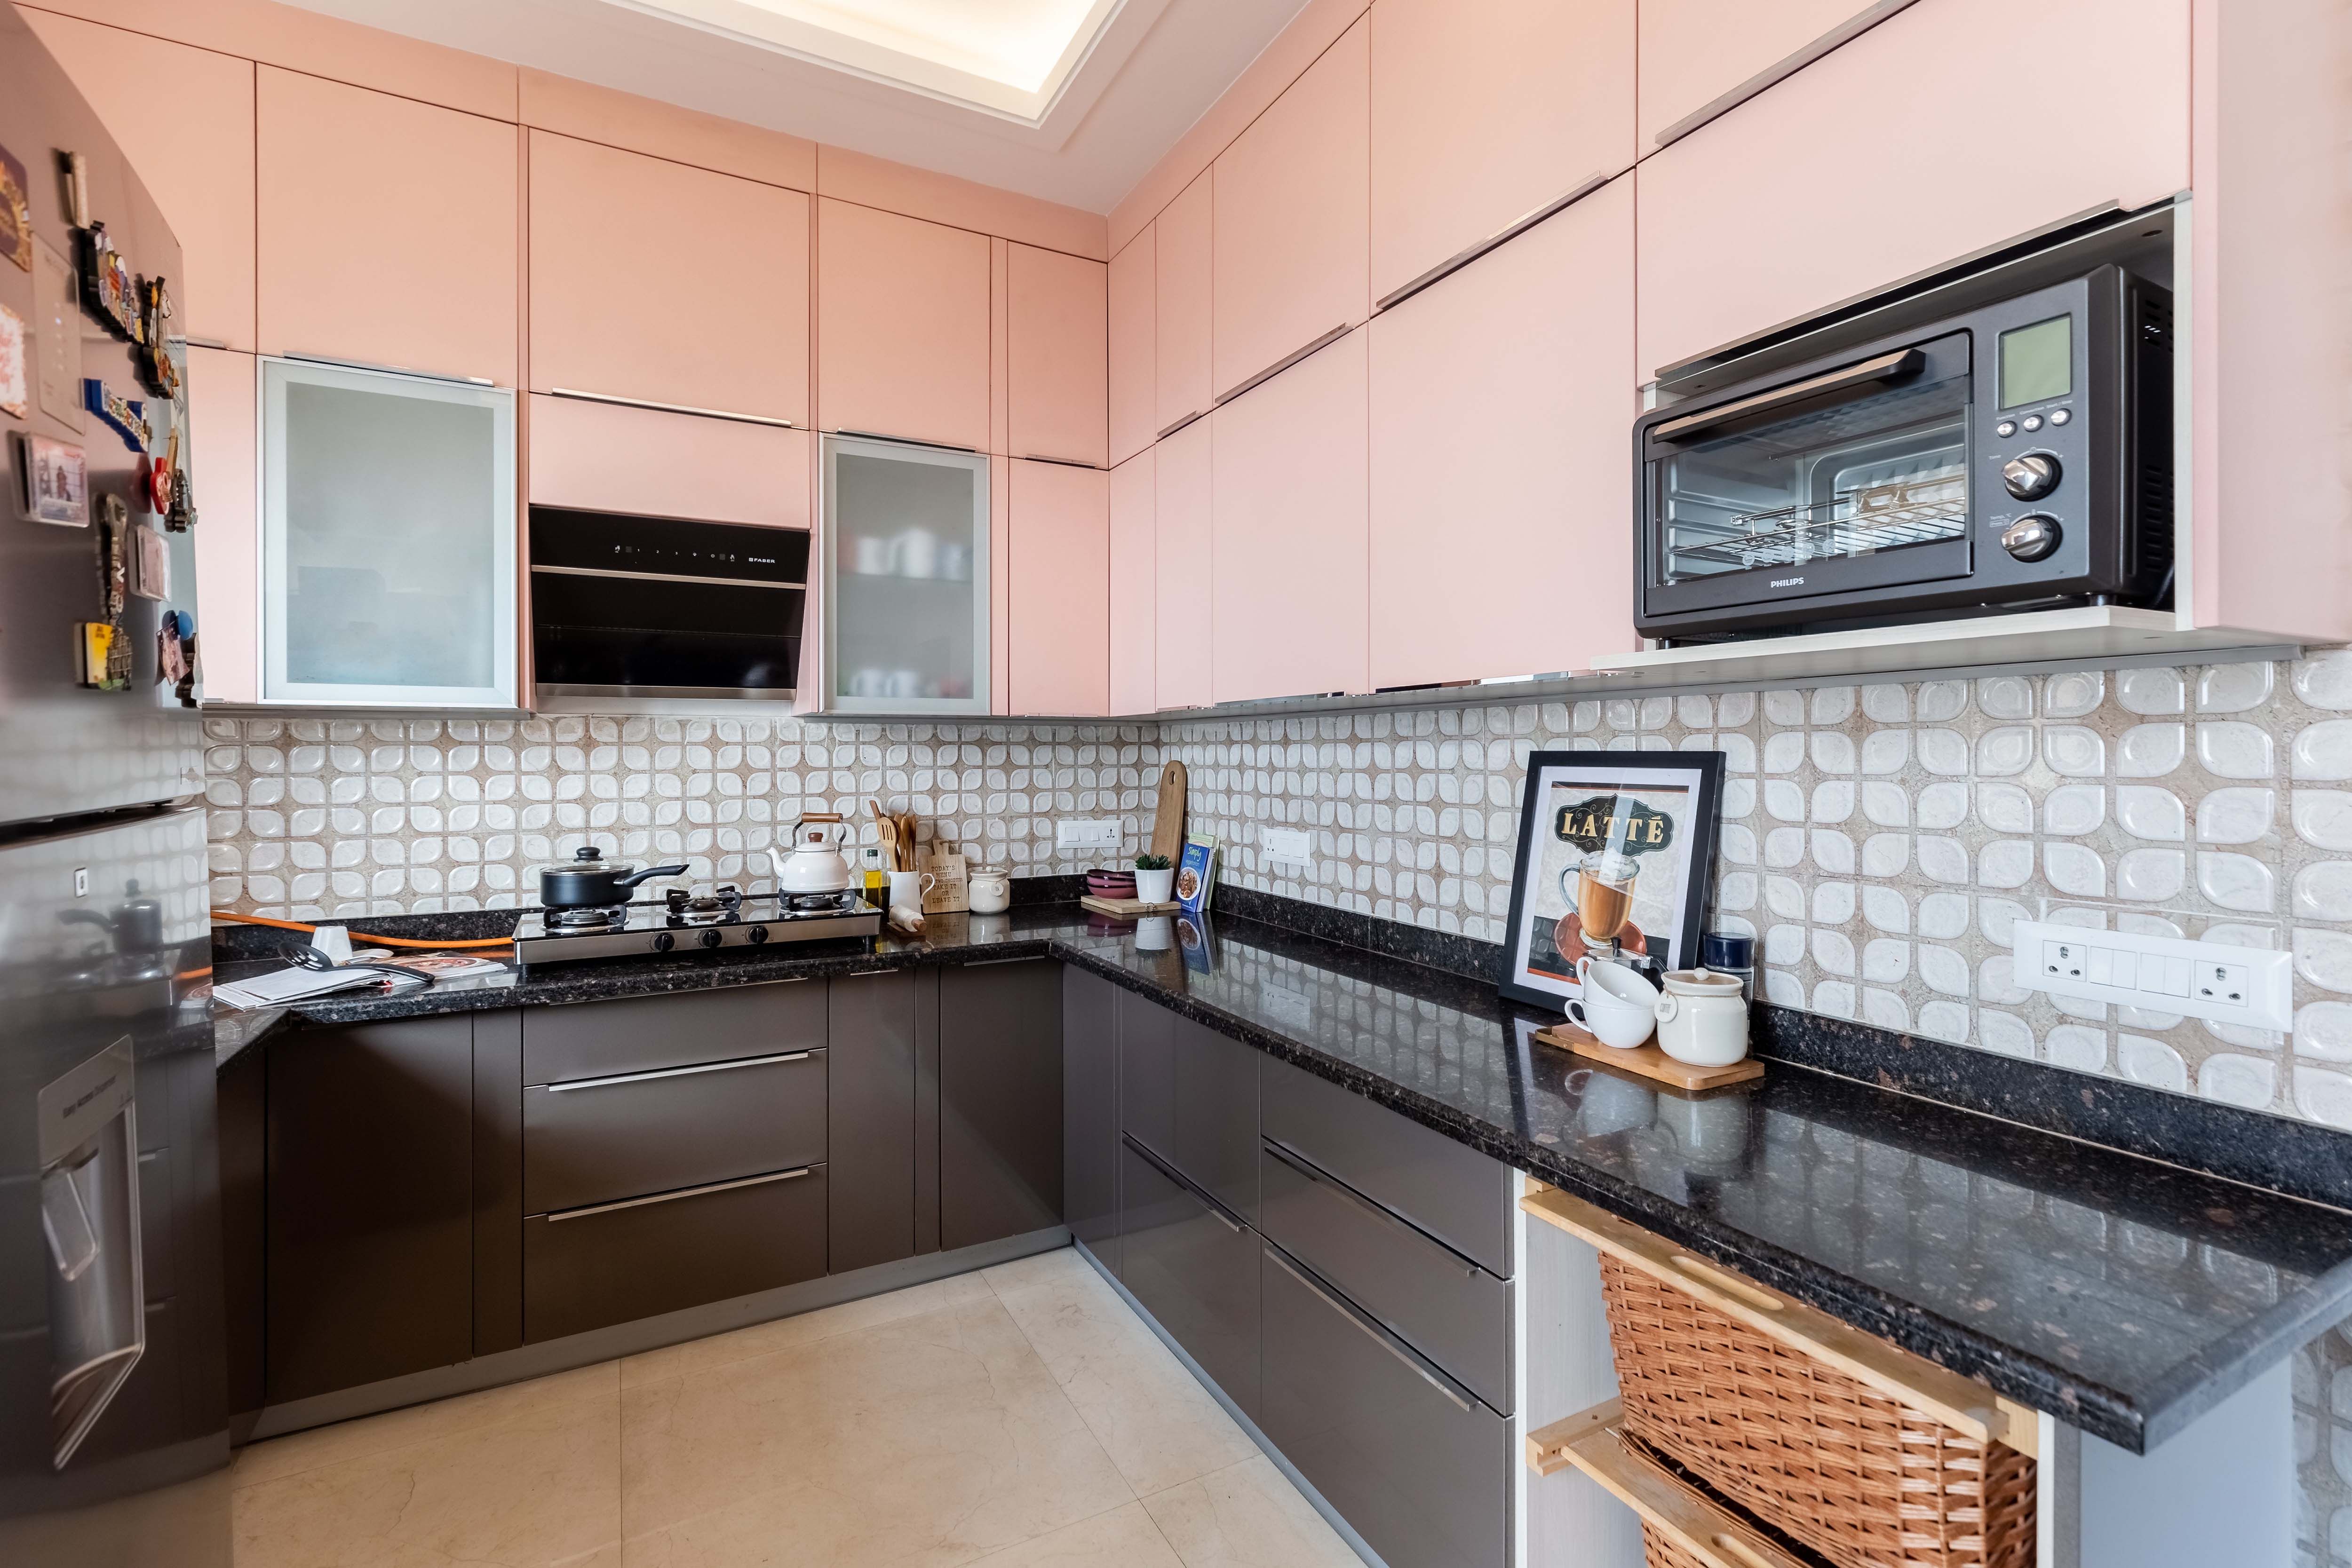 Modern U-Shaped Kitchen Design With Rose Pink Wall And Loft Units